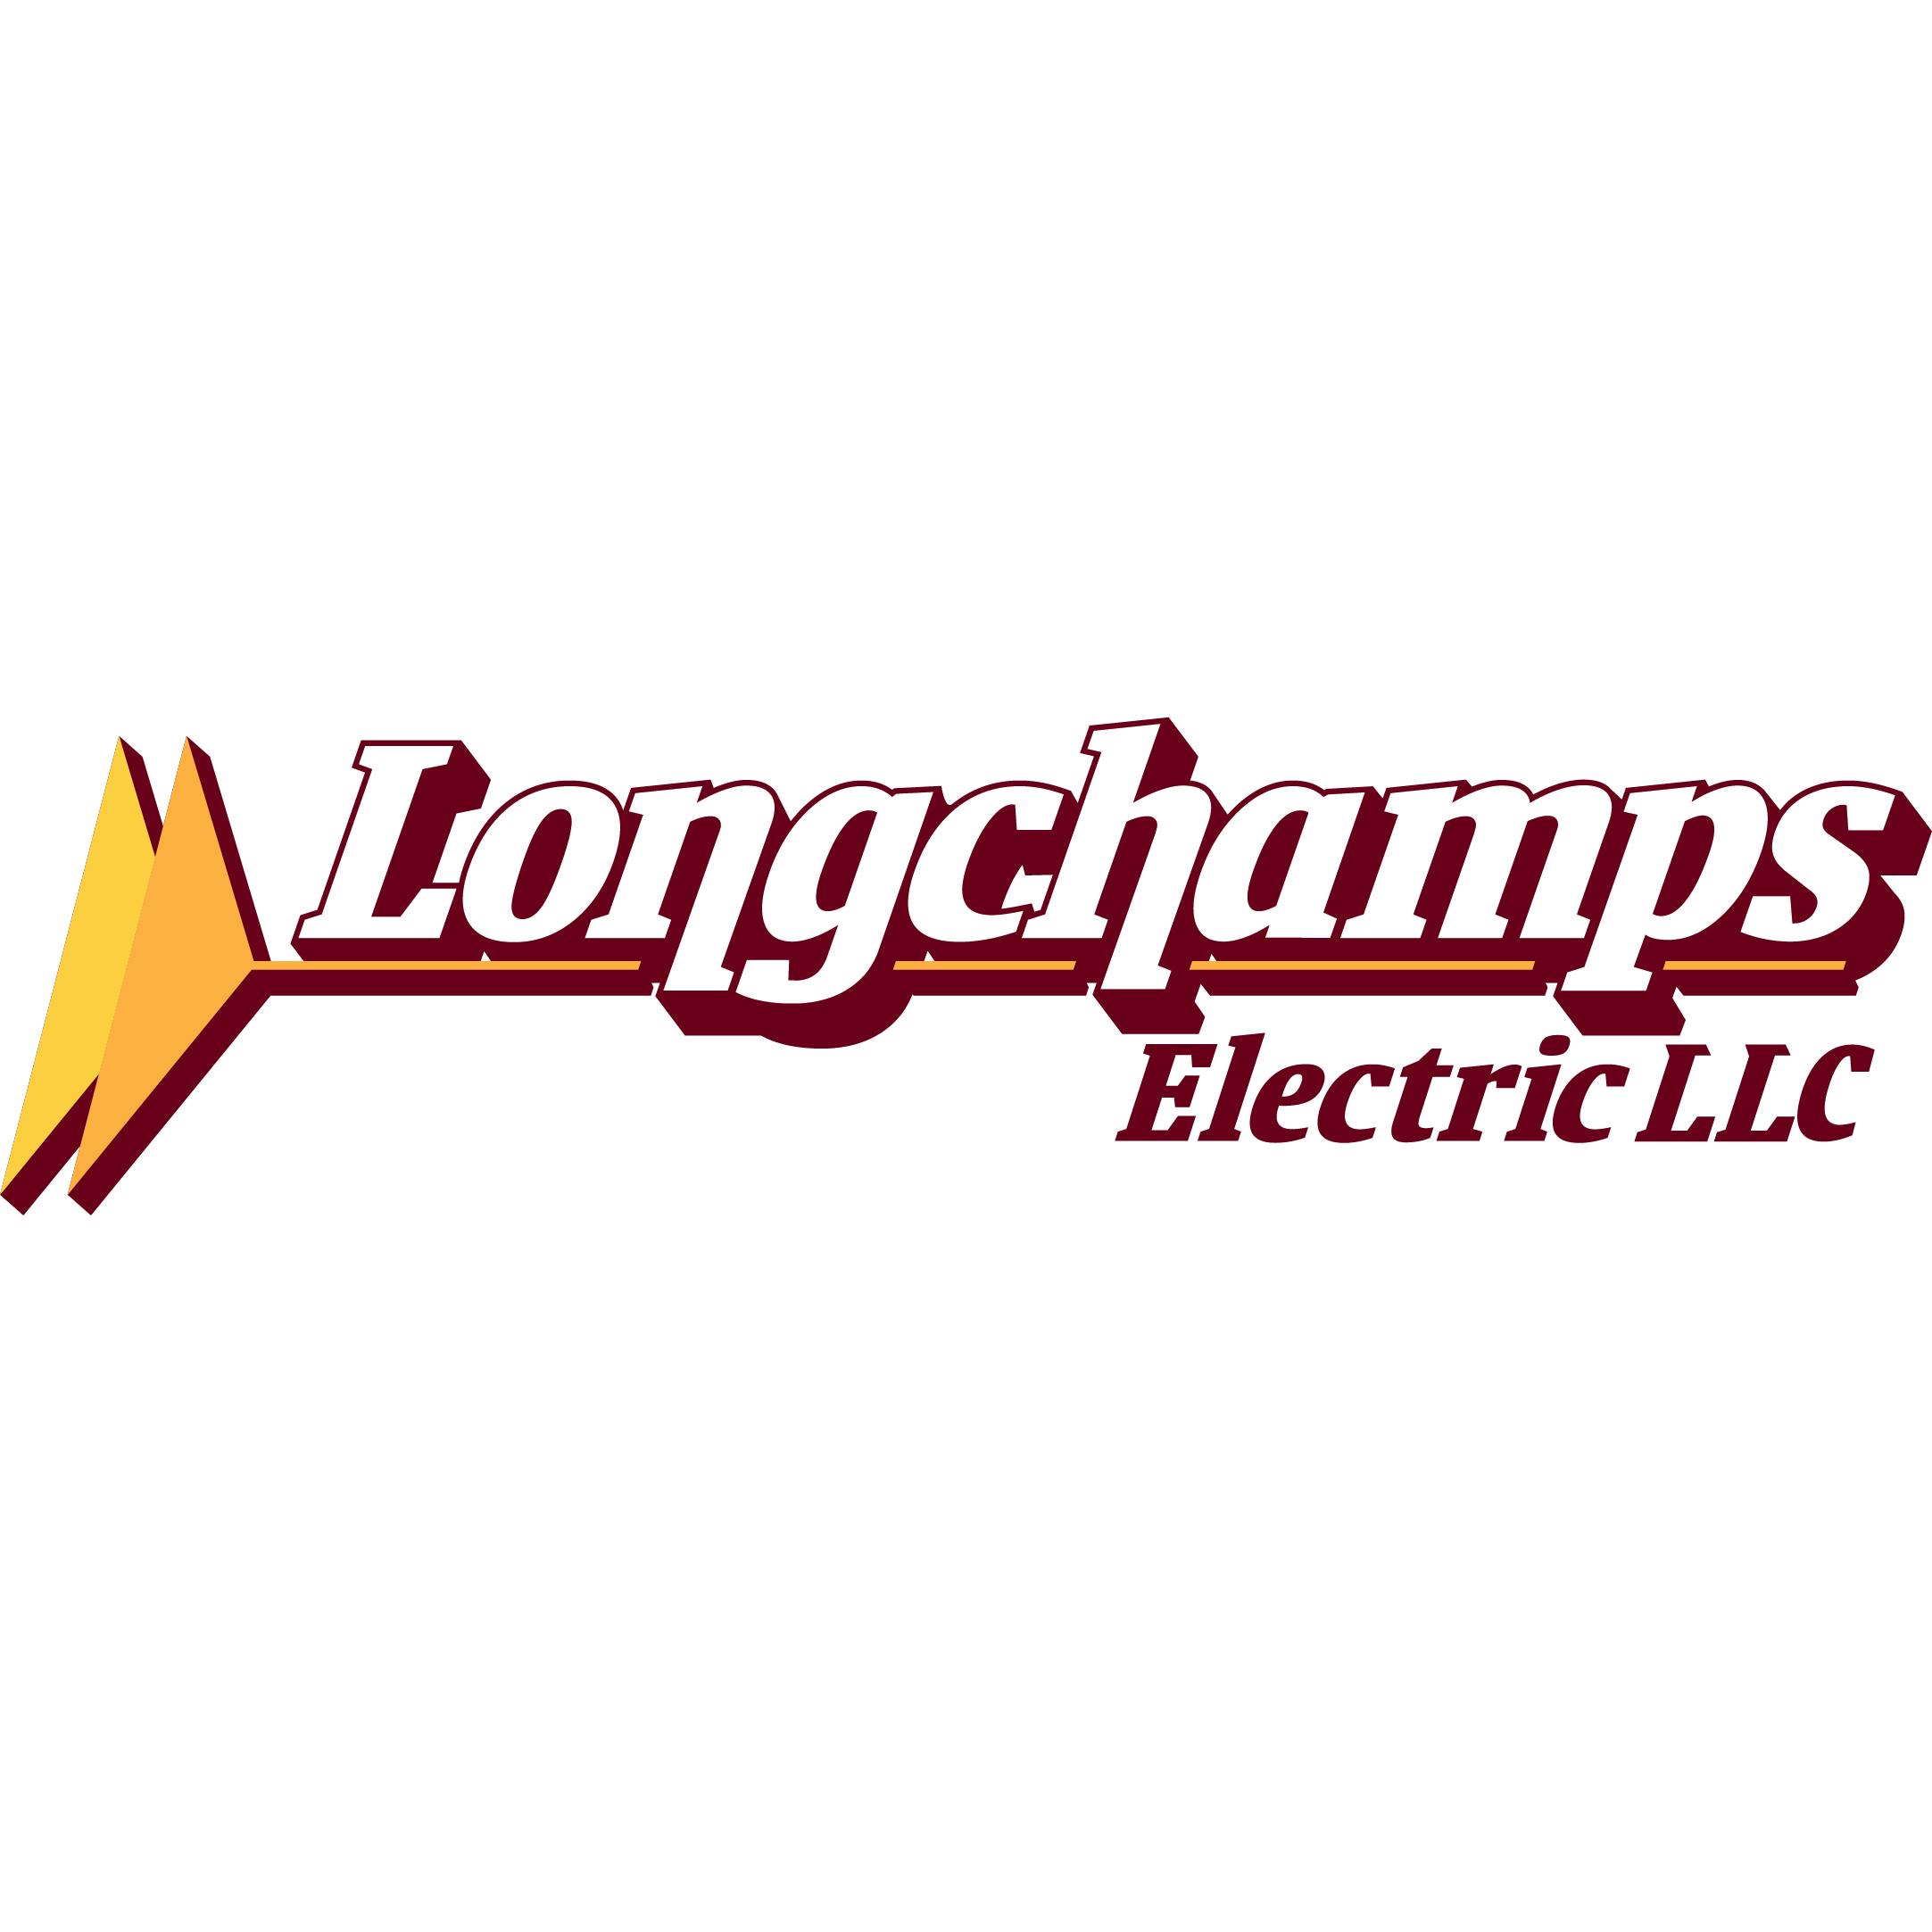 Longchamps Electric